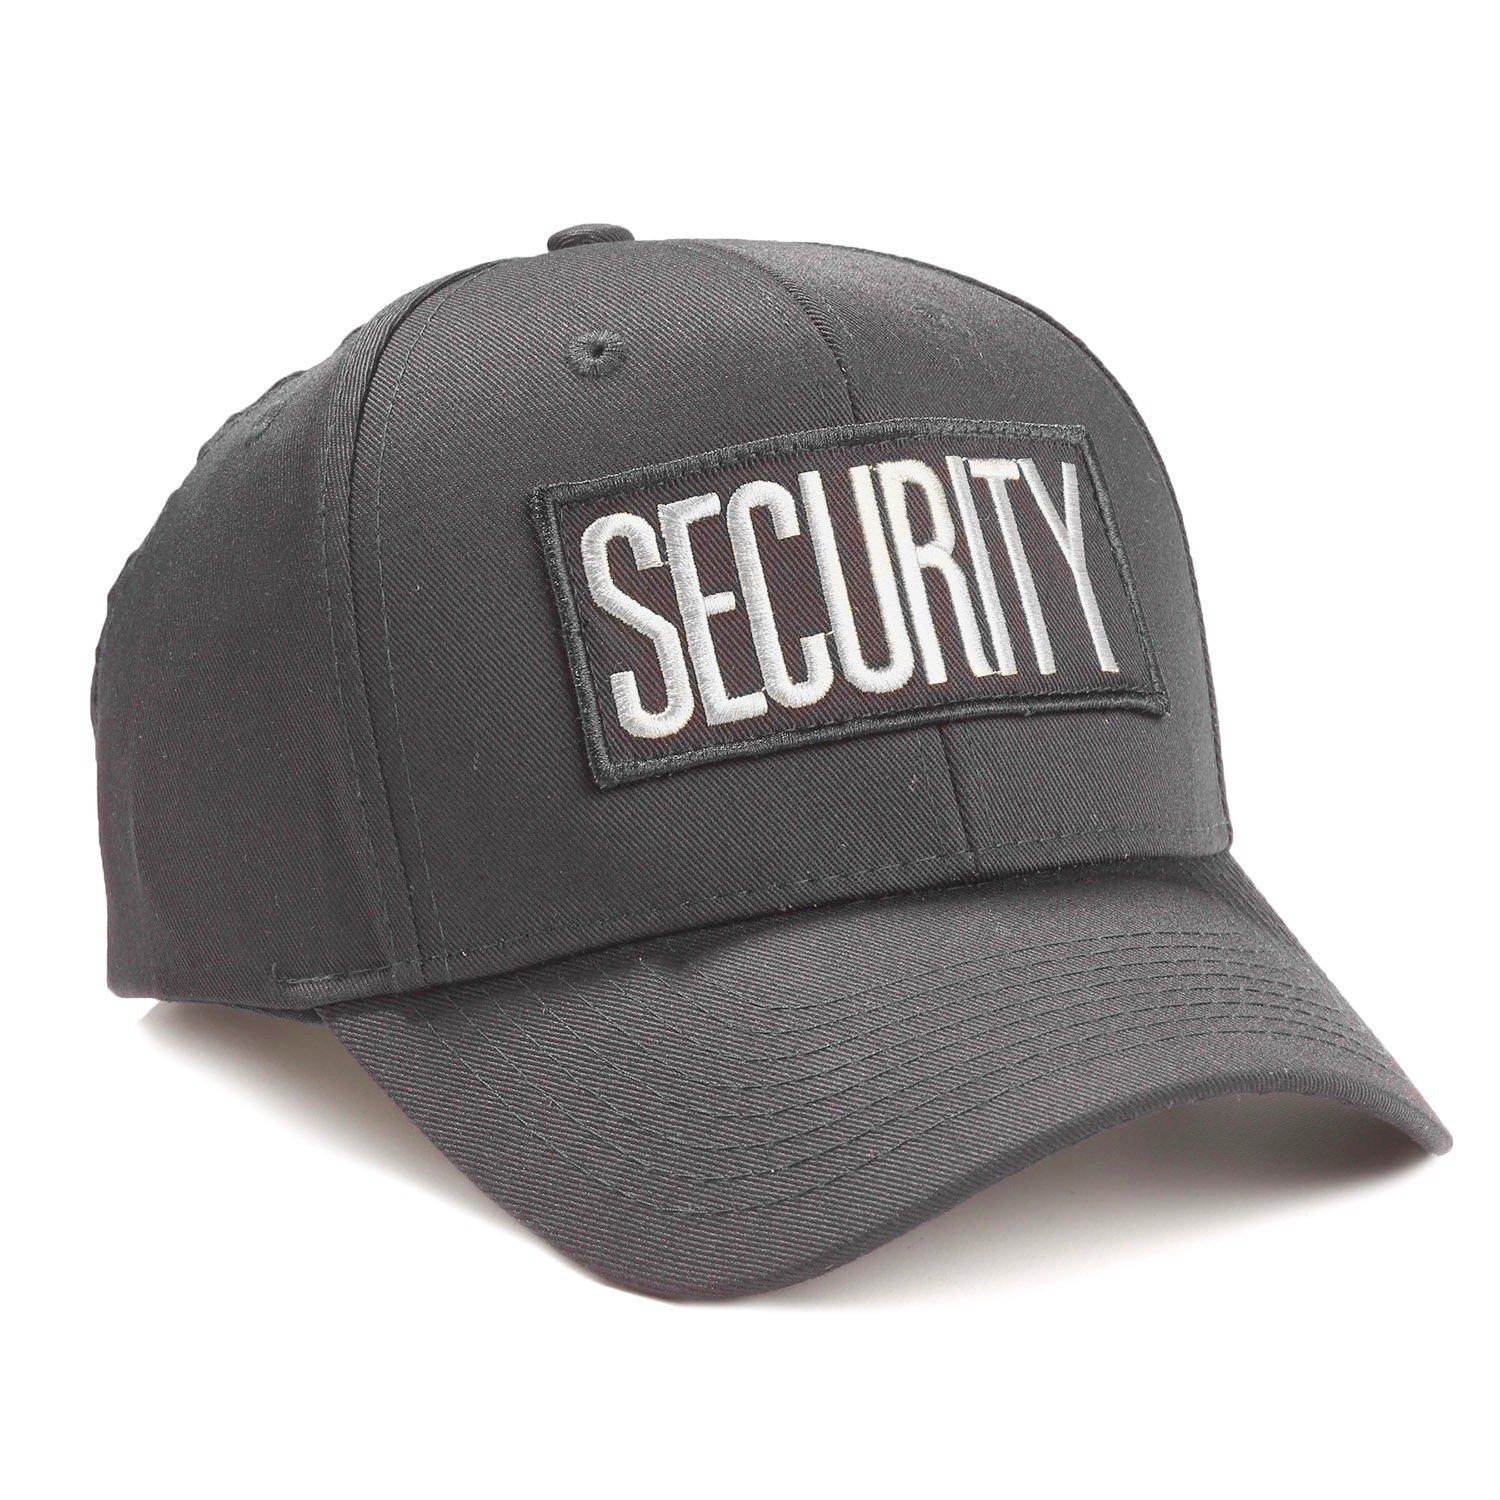 GALLS 6-PANEL SECURITY HAT